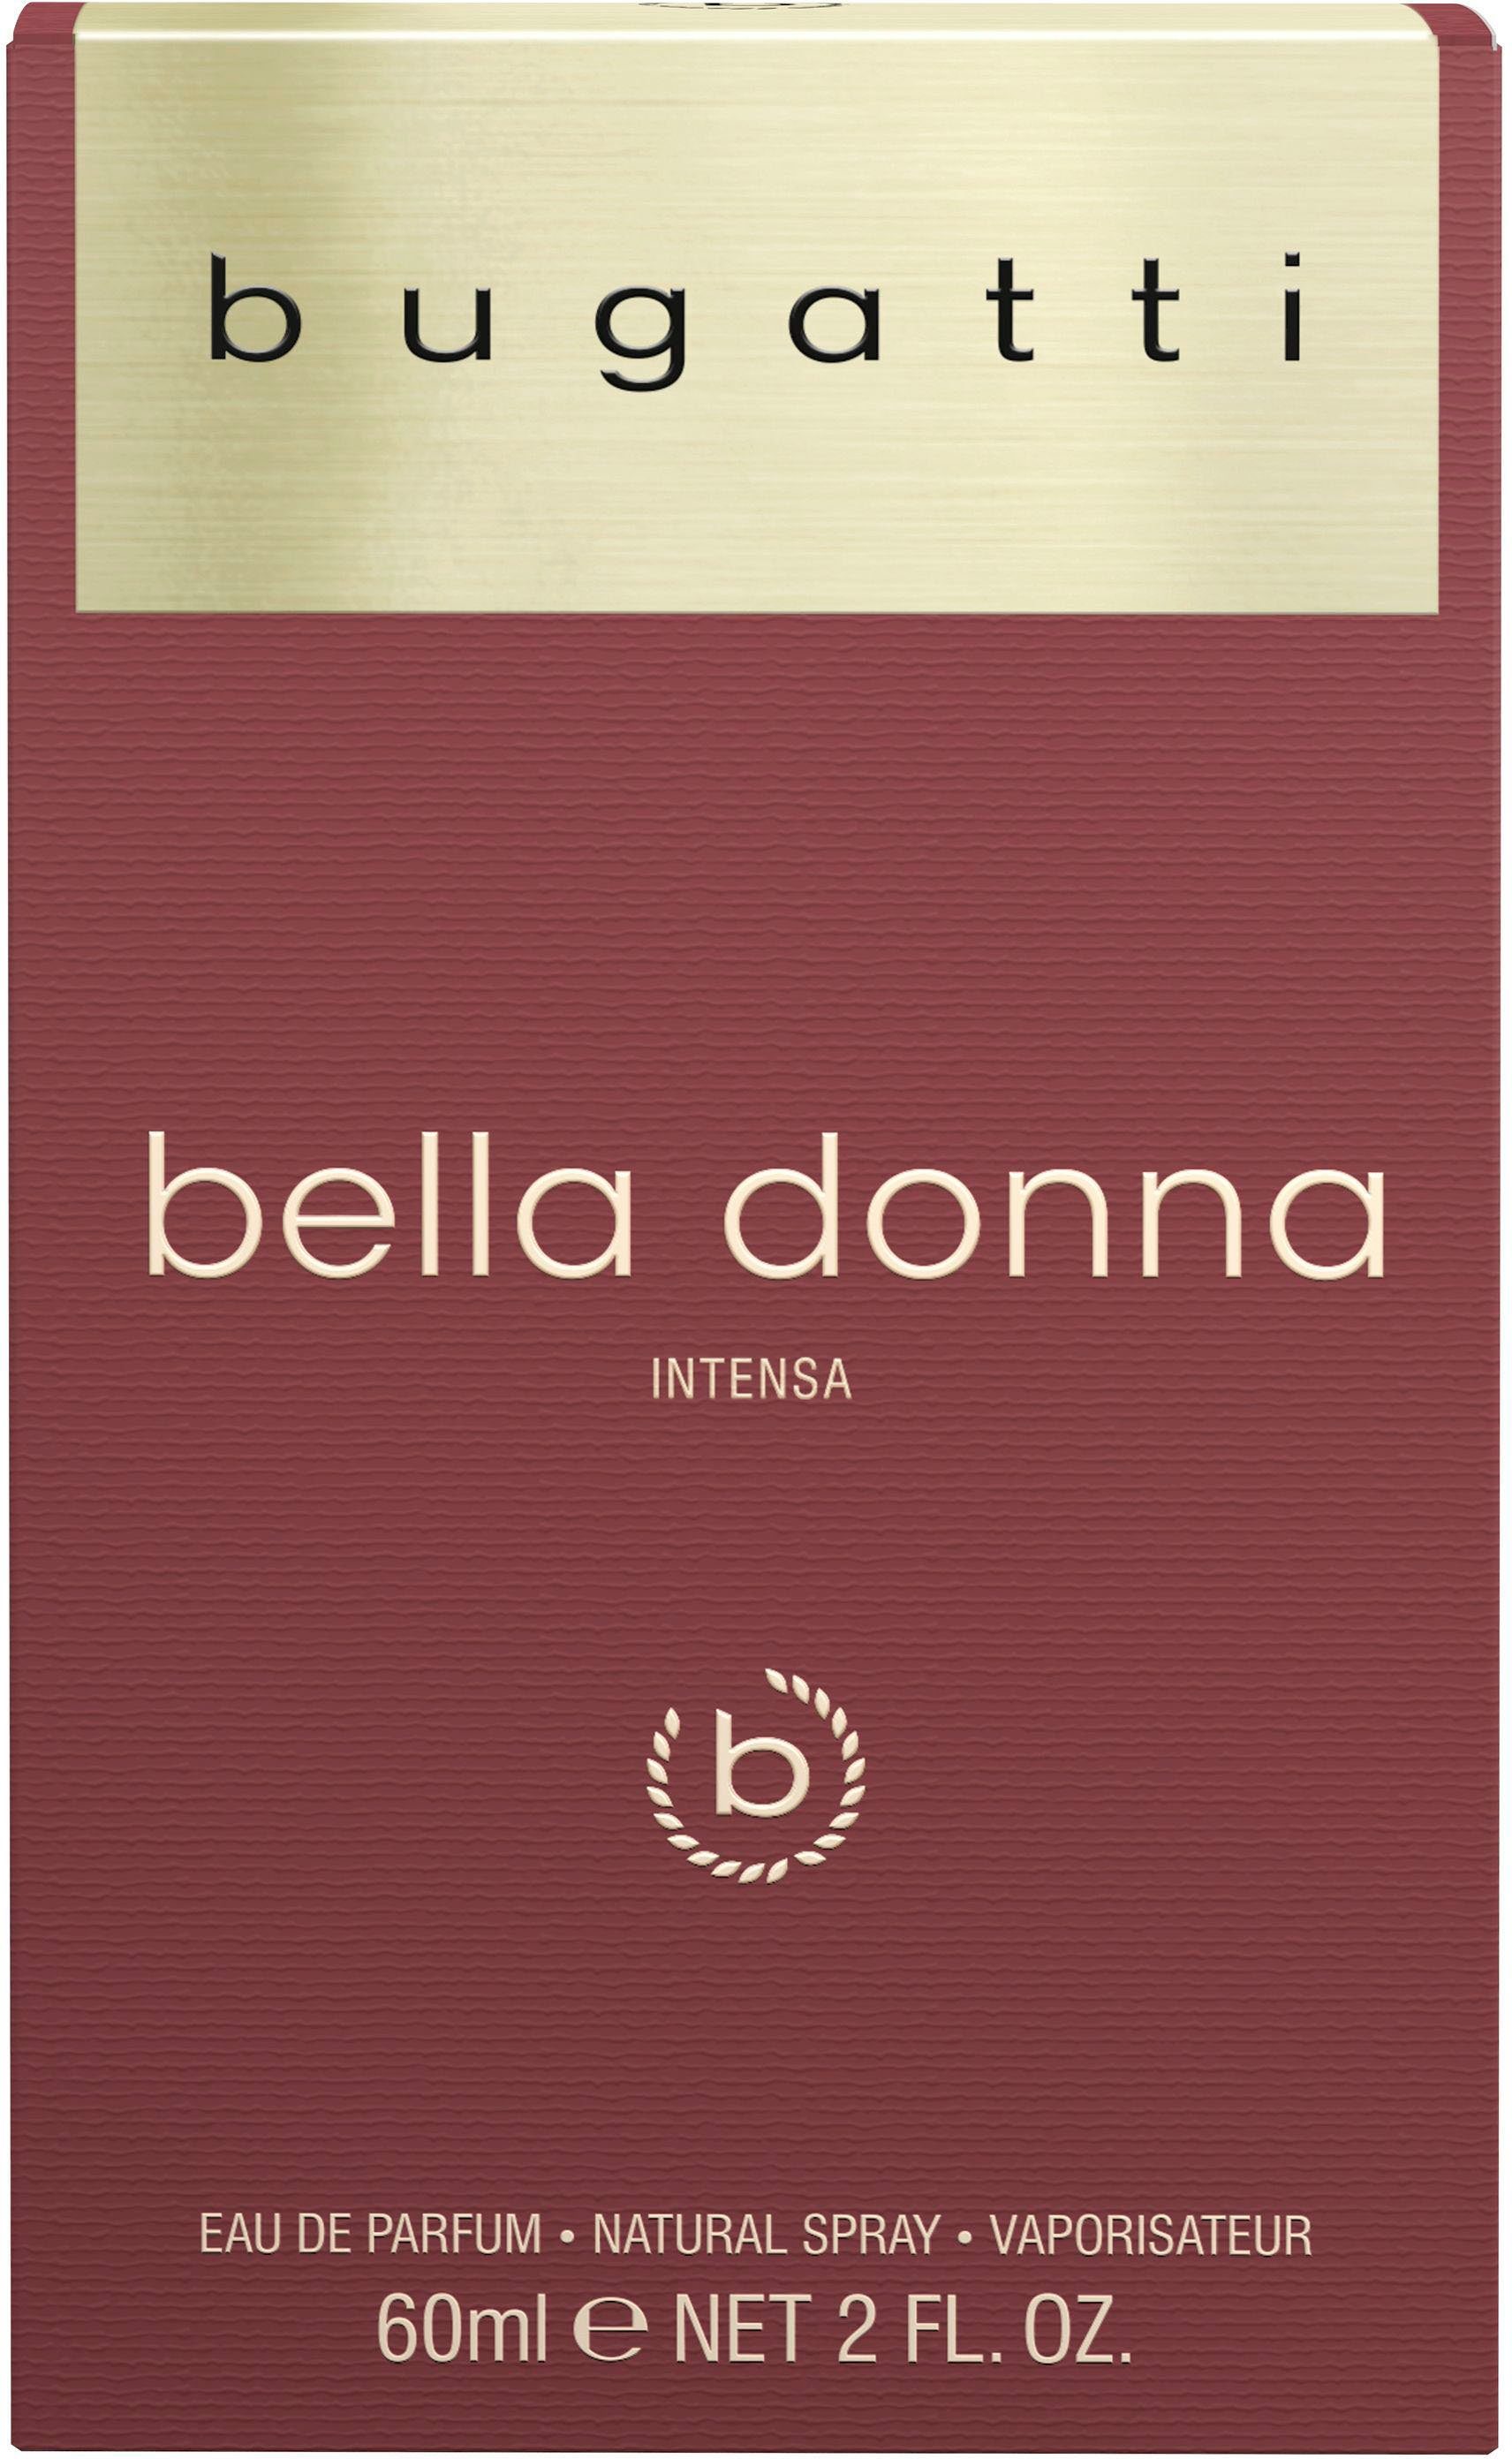 Bella Eau Parfum de Donna intensa bugatti ml 60 EdP